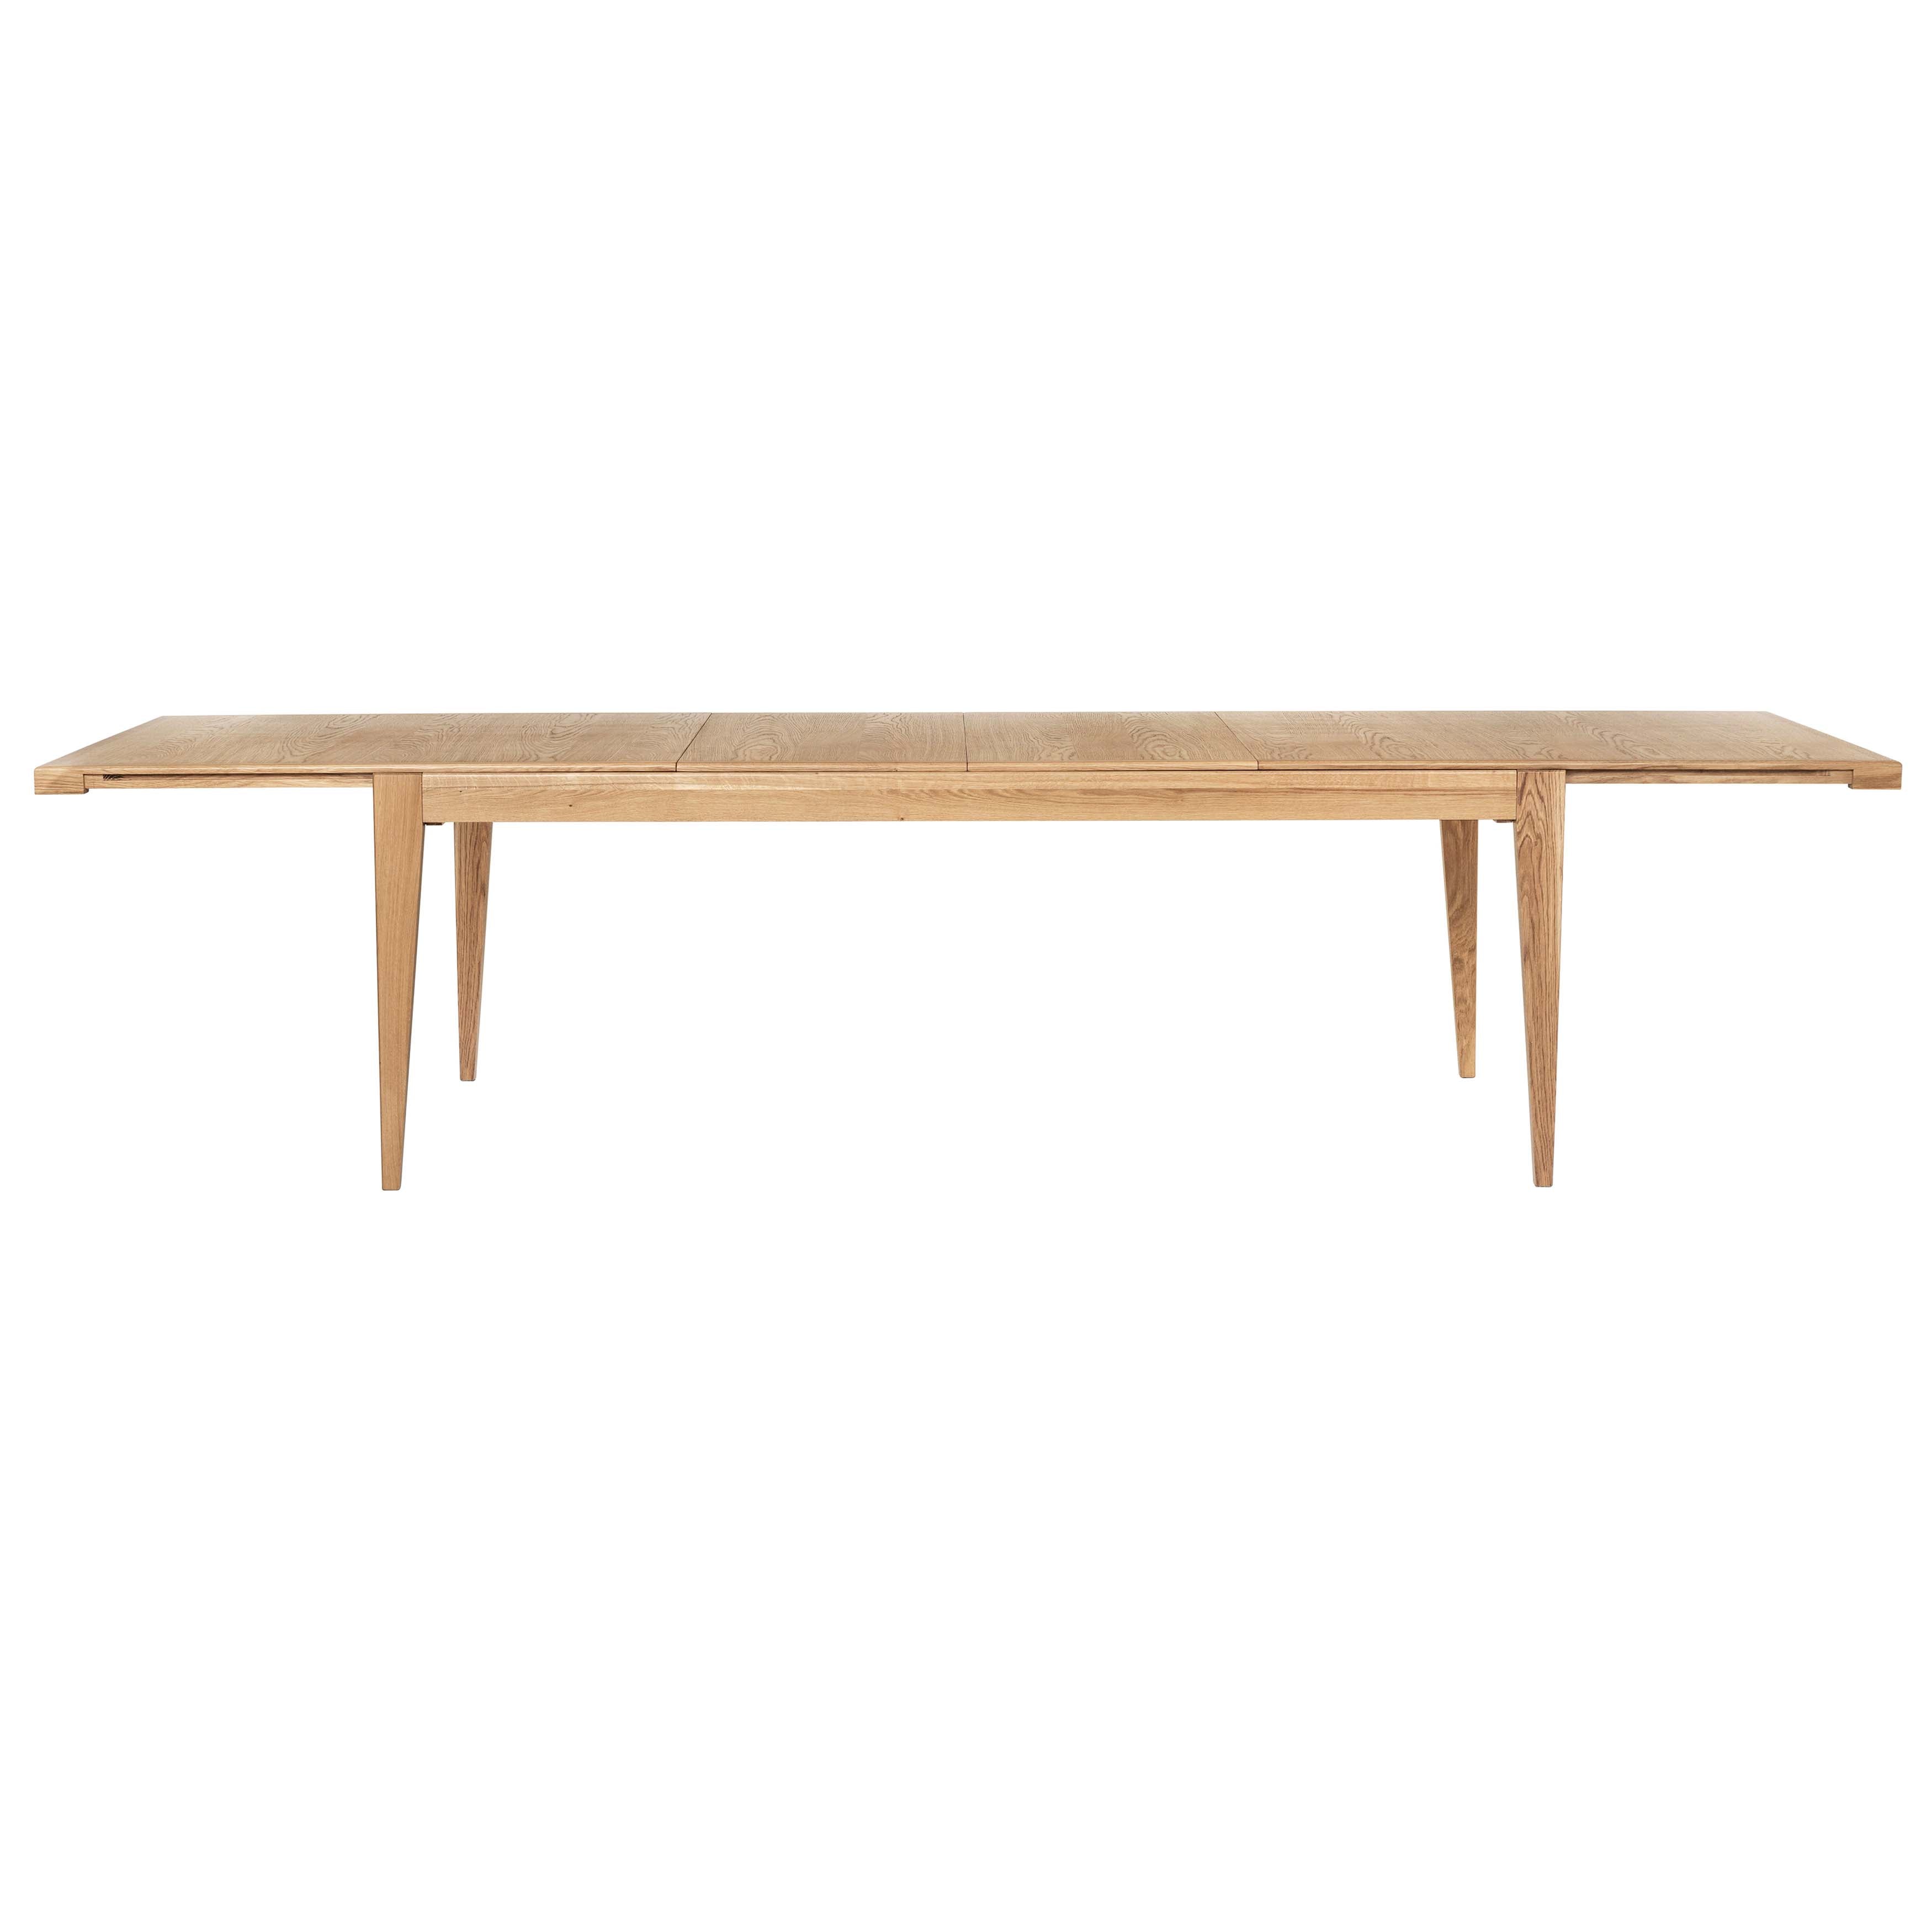 S-Table: Rectangular + Oak